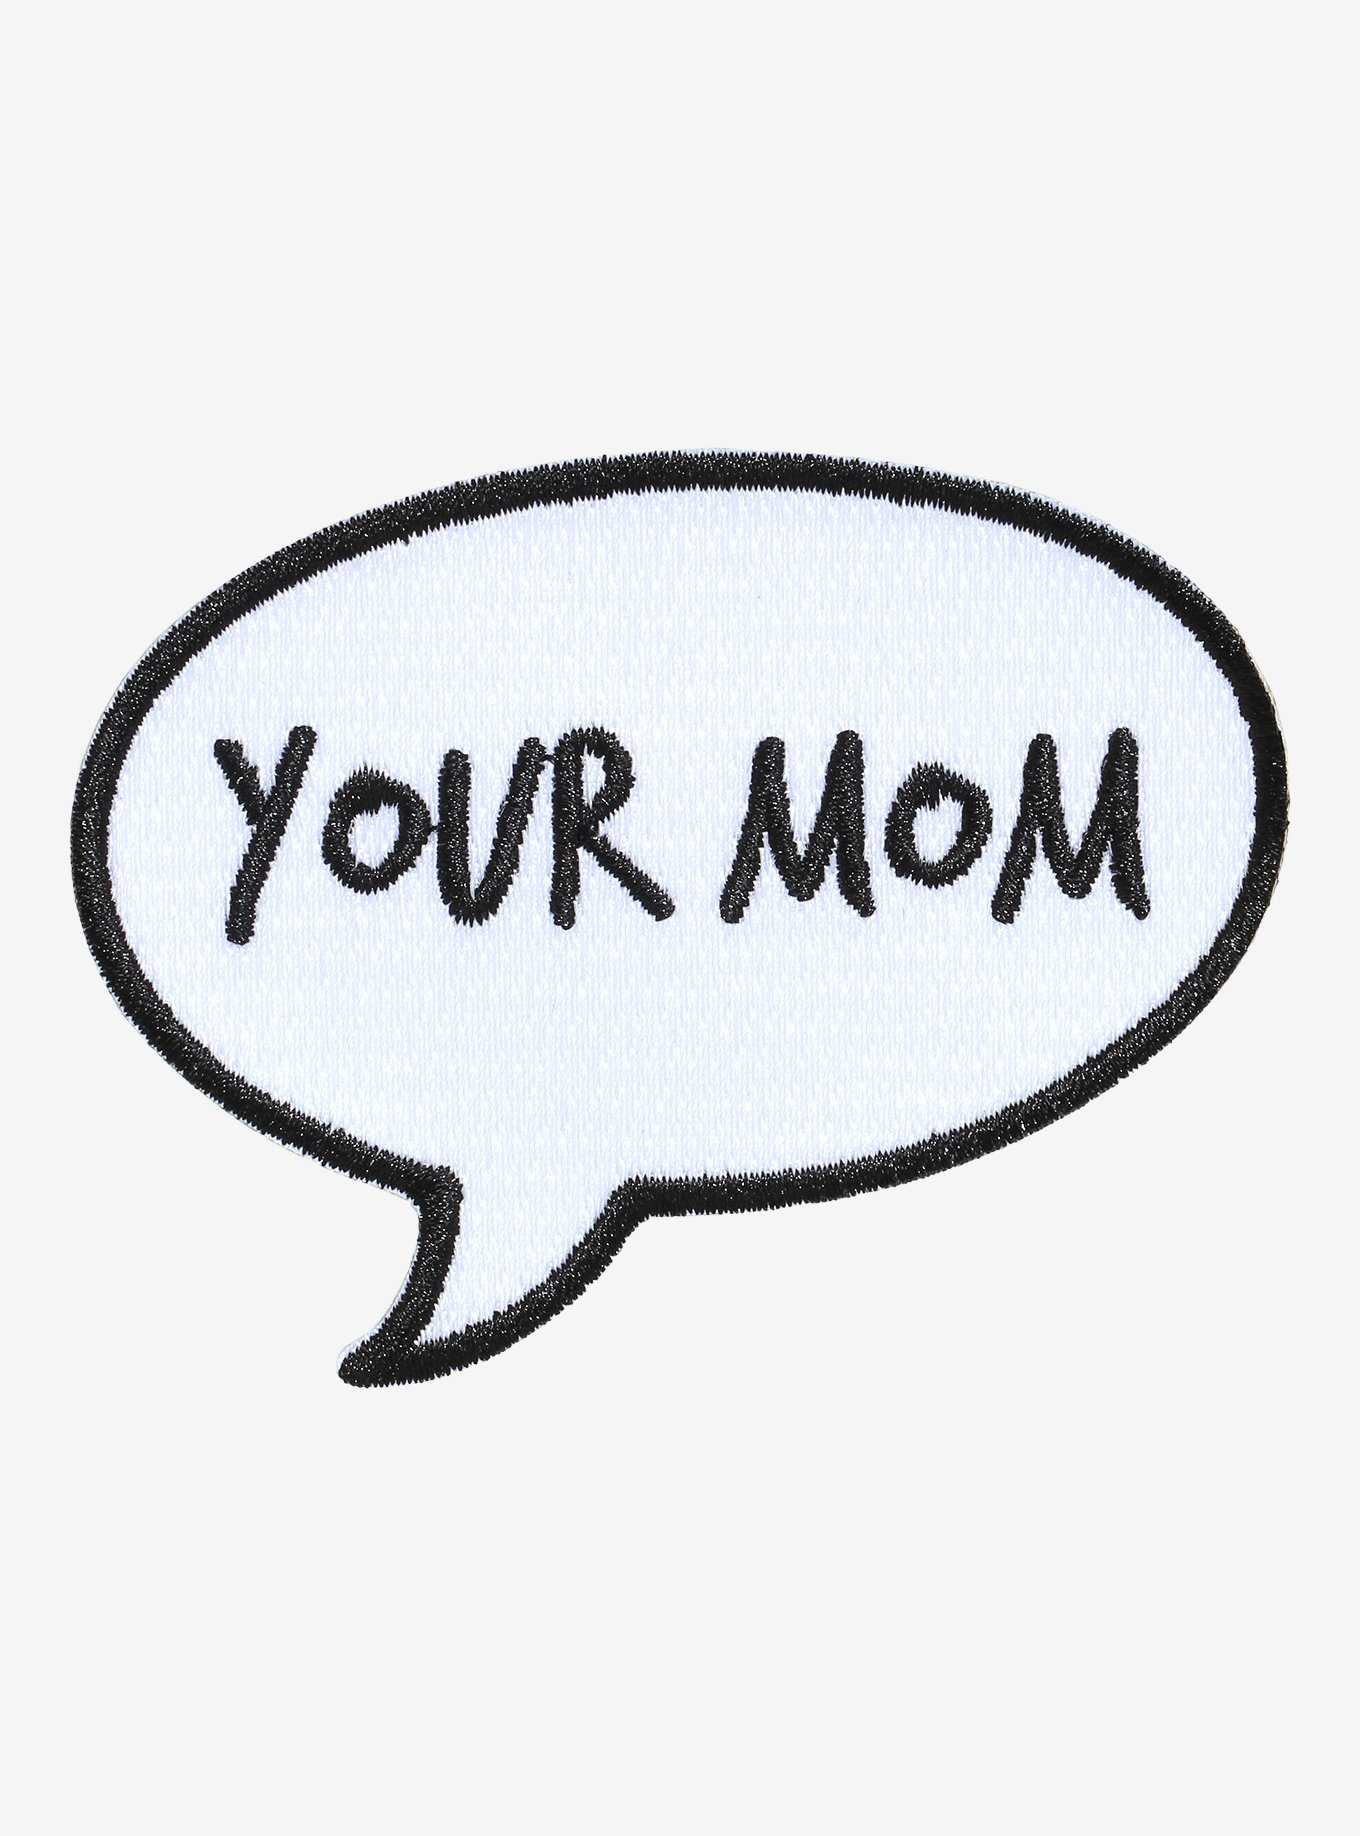 Your Mom Speech Bubble Patch, , hi-res